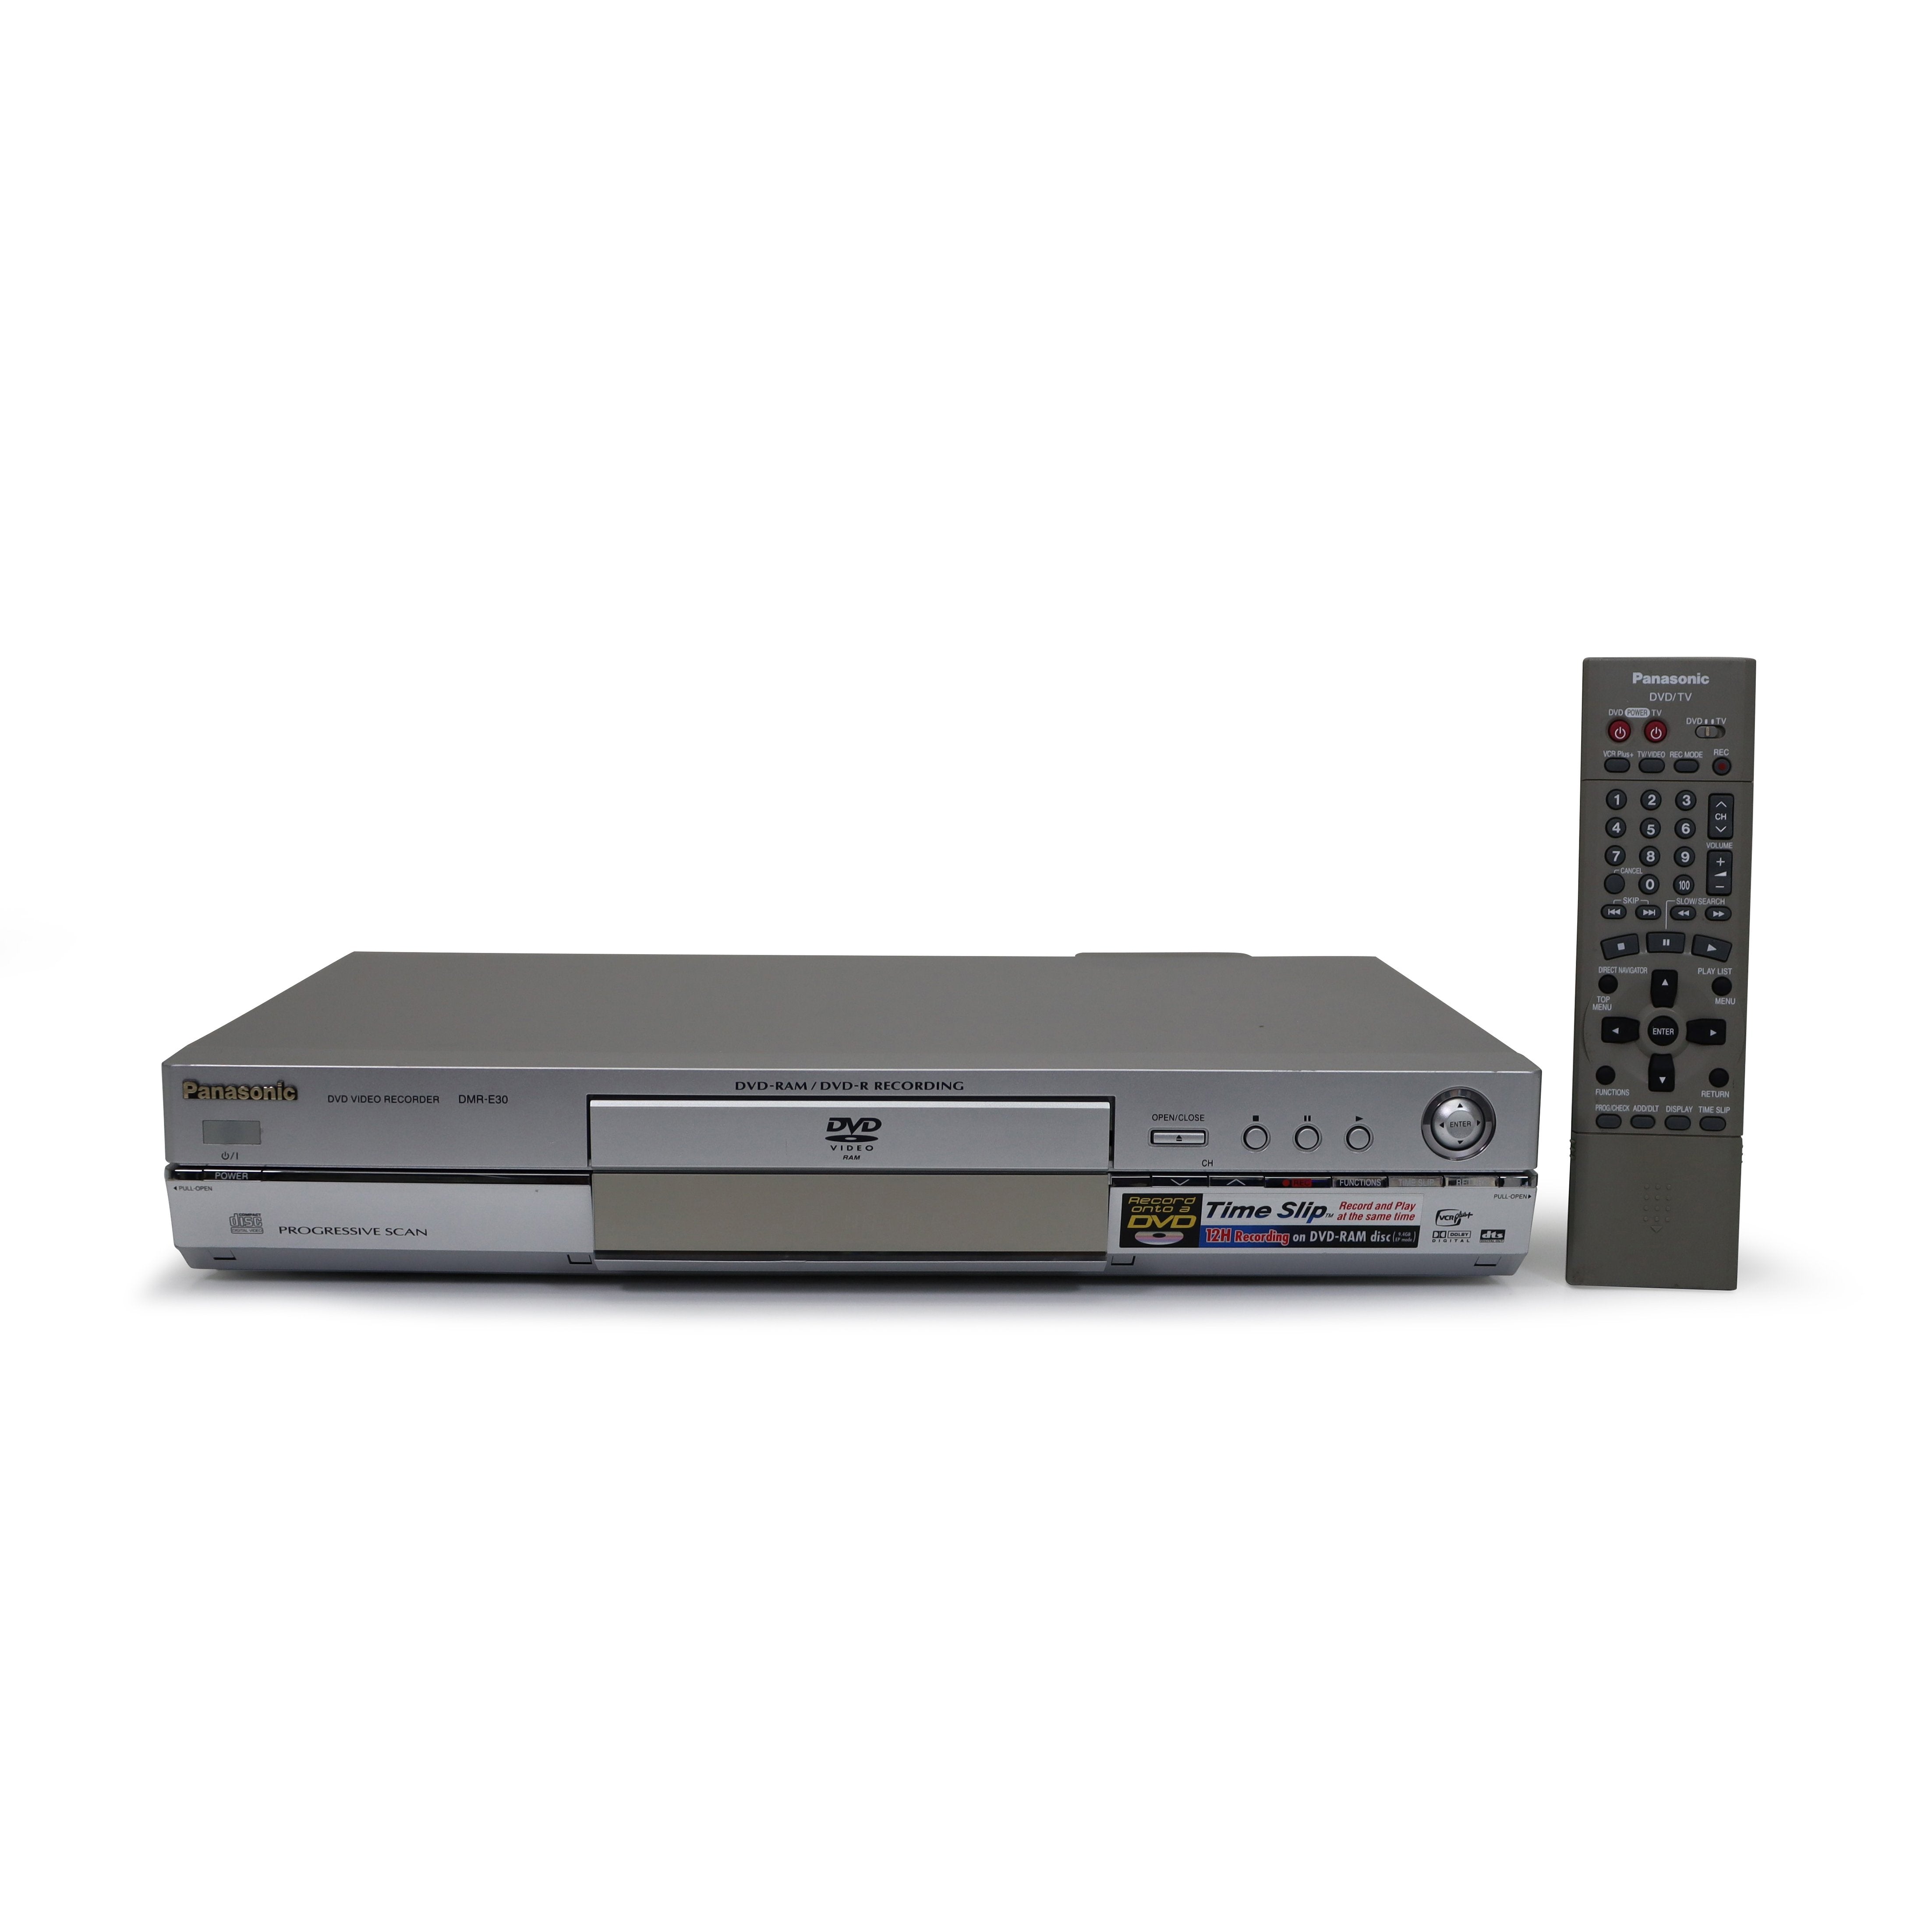 bundel Shipley documentaire Panasonic DMR-E30 DVD Recorder and Player